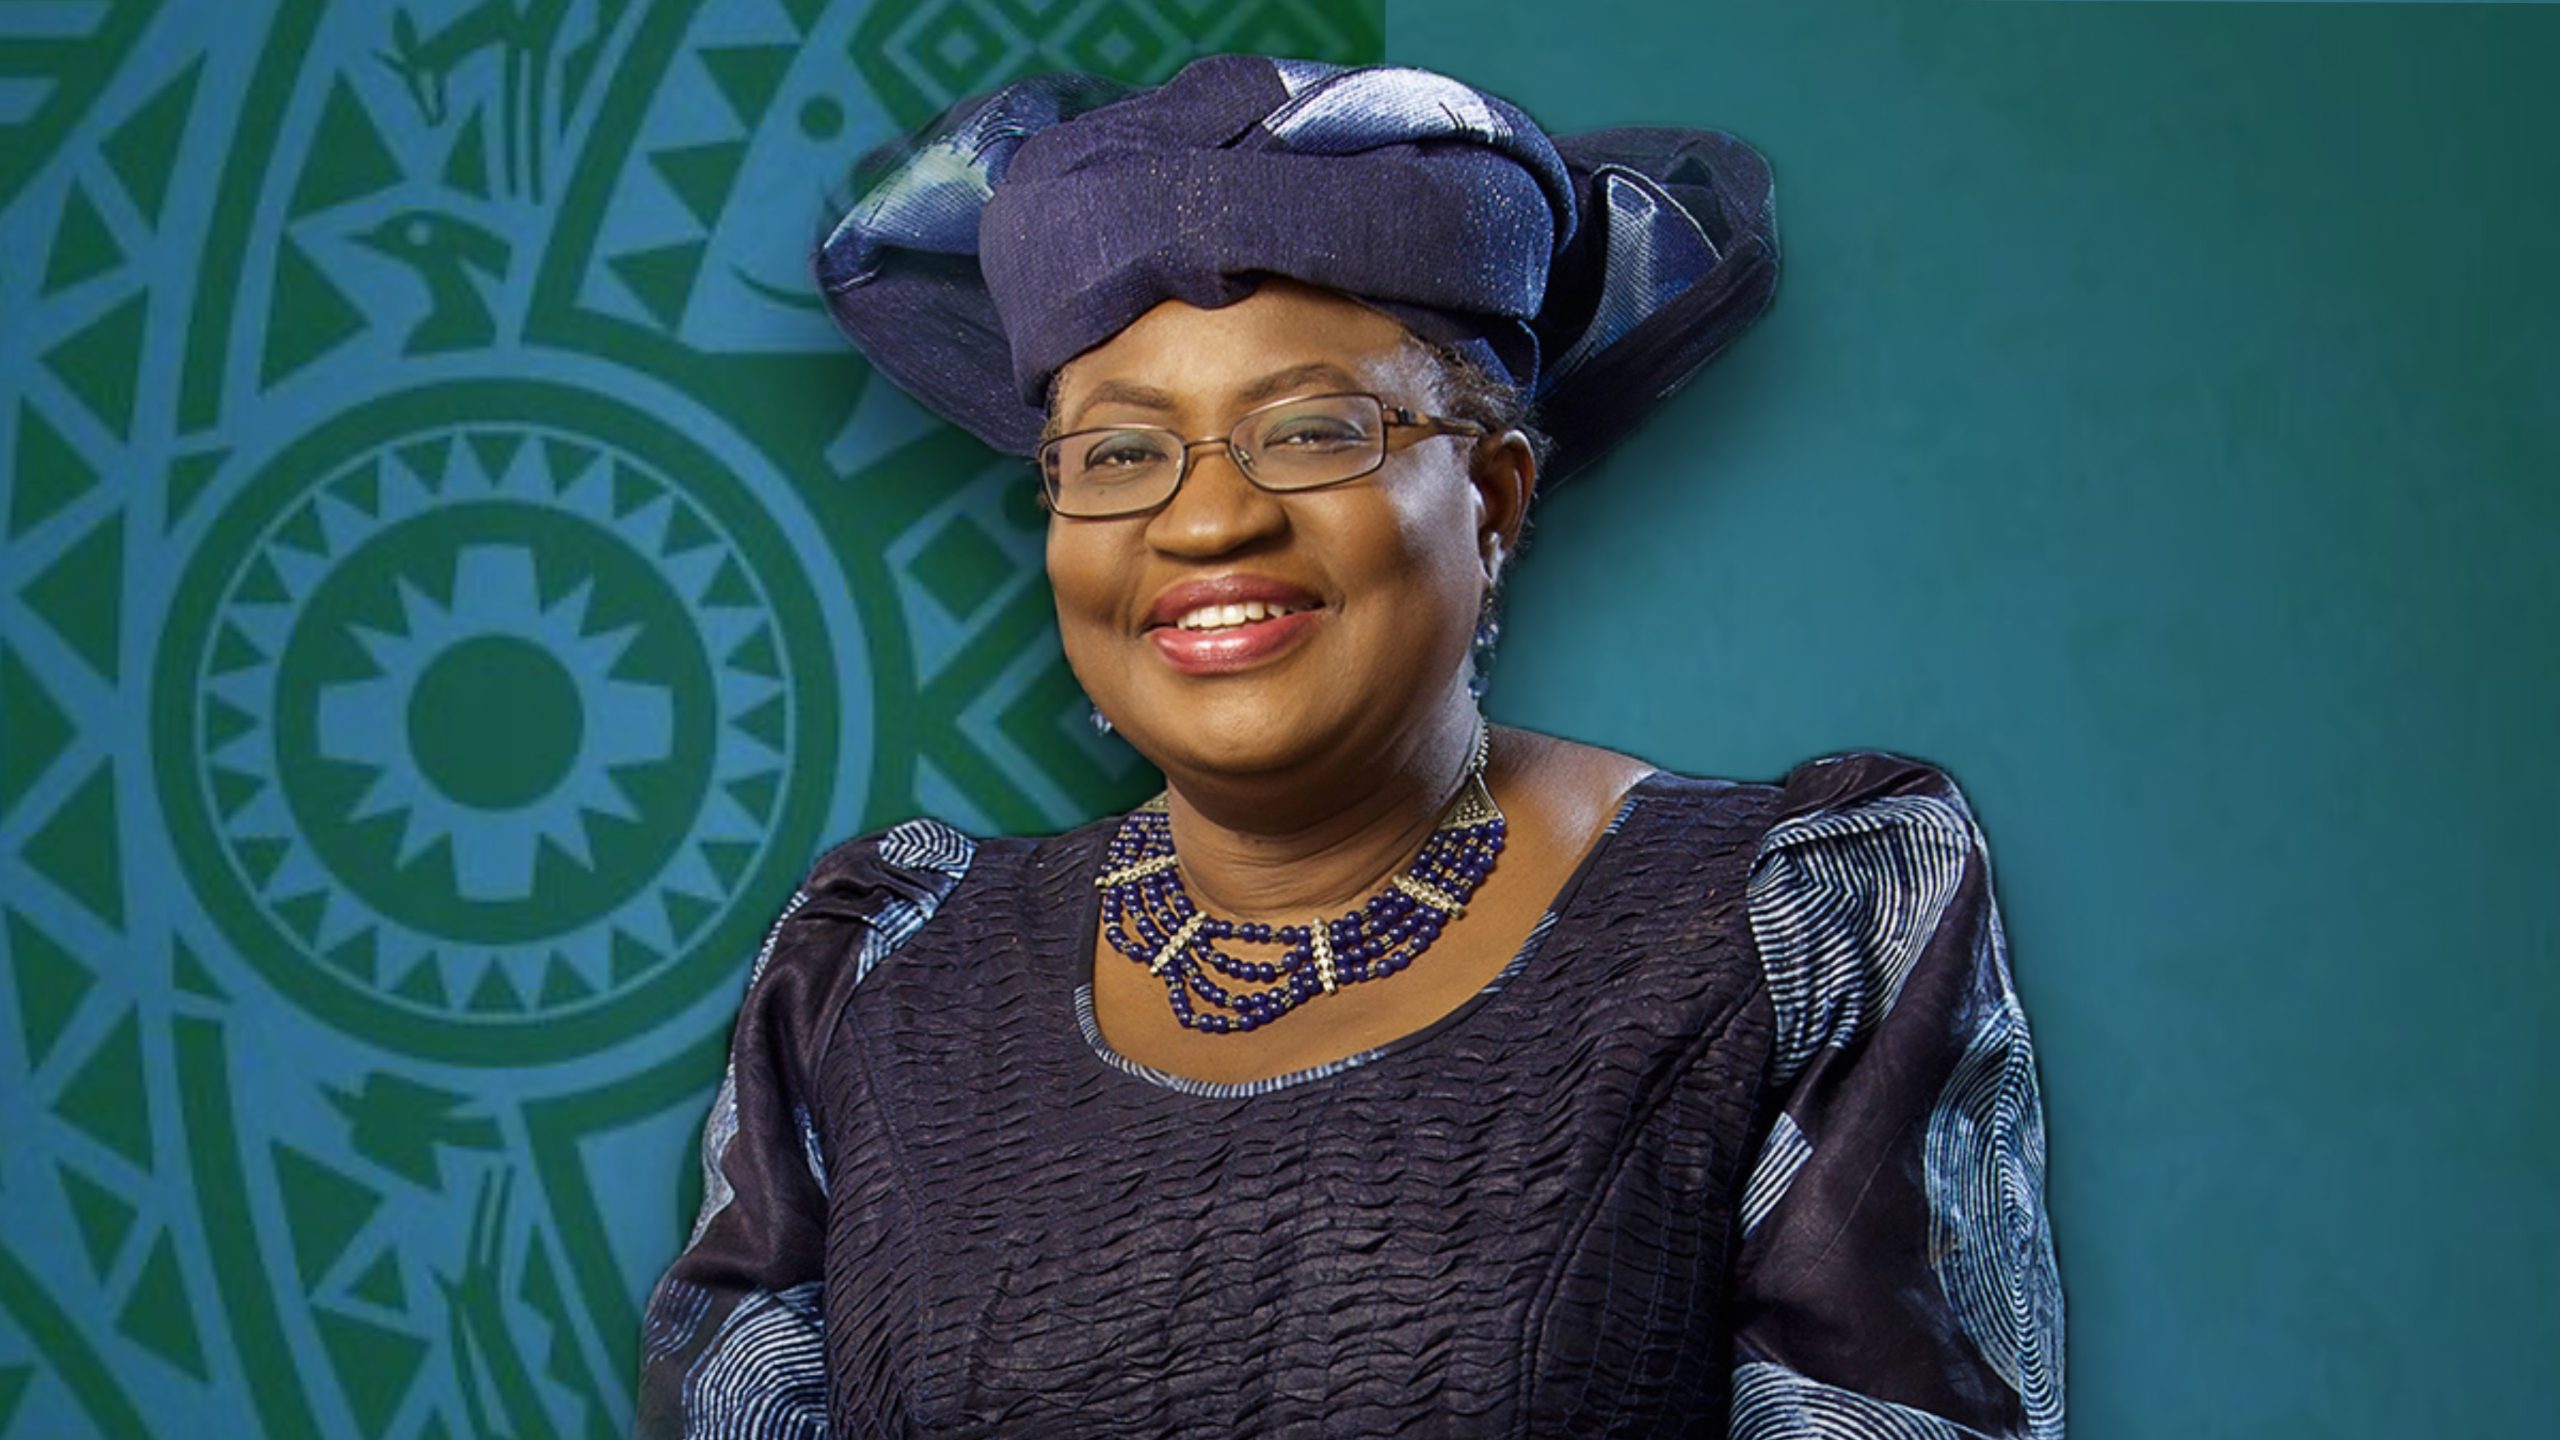 Ngozi Okonjo-Iweala: Pioneering Economist & WTO Leader Changing the World